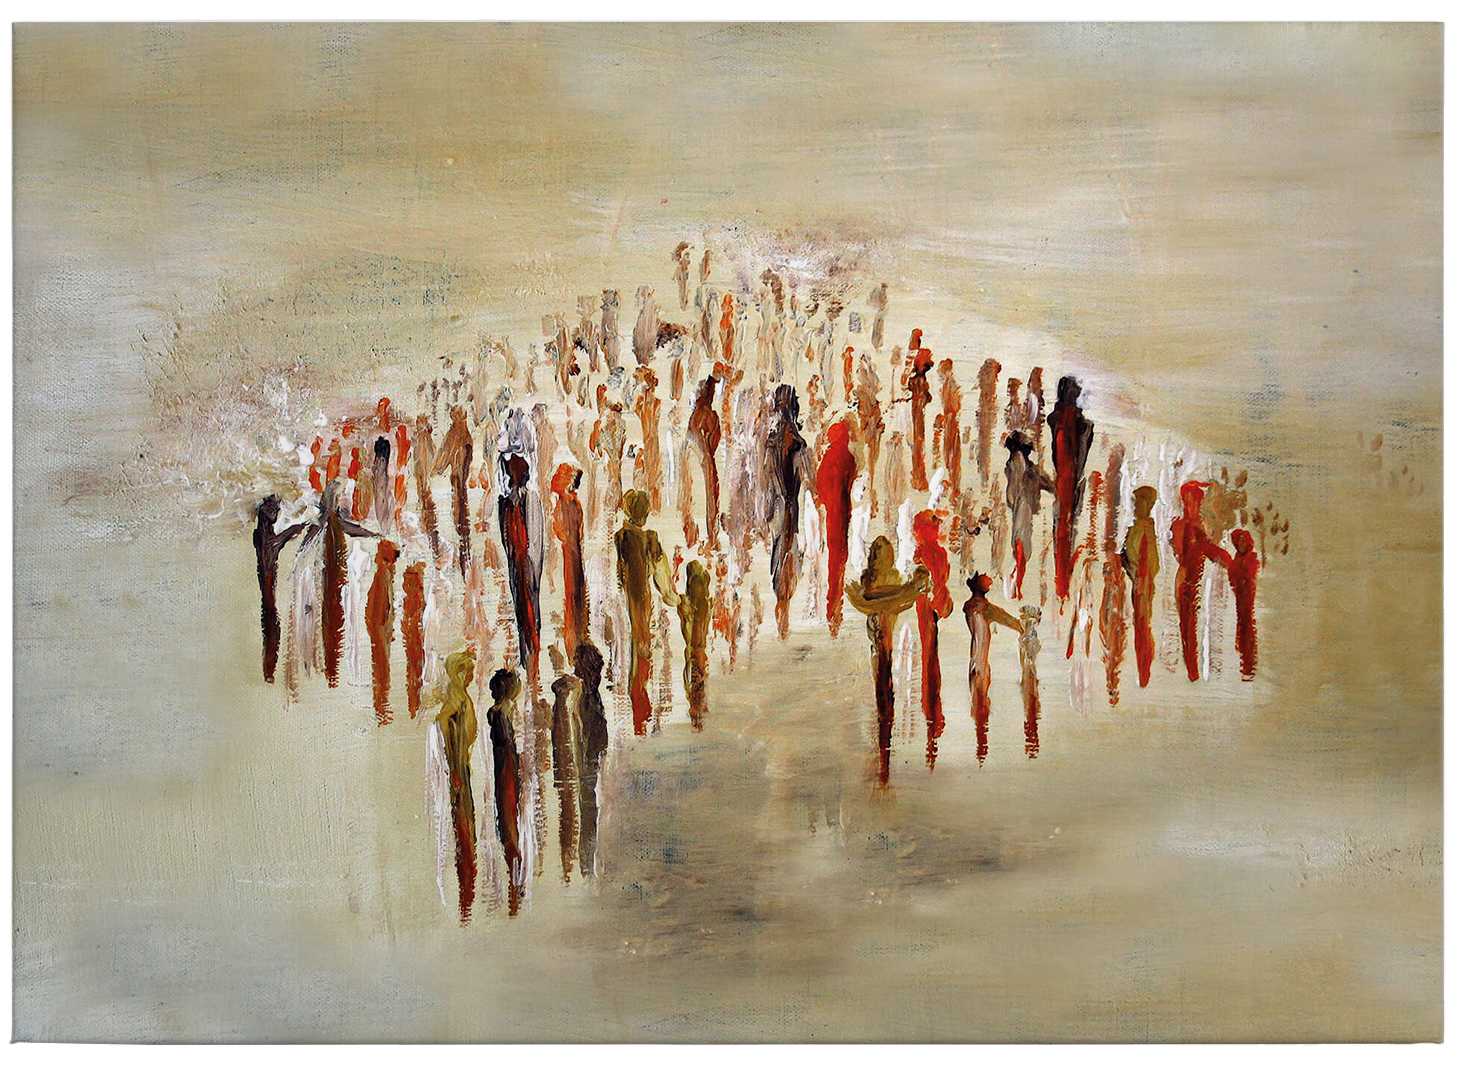             Canvas schilderij Art by Melz "People 02" - 0,70 m x 0,50 m
        